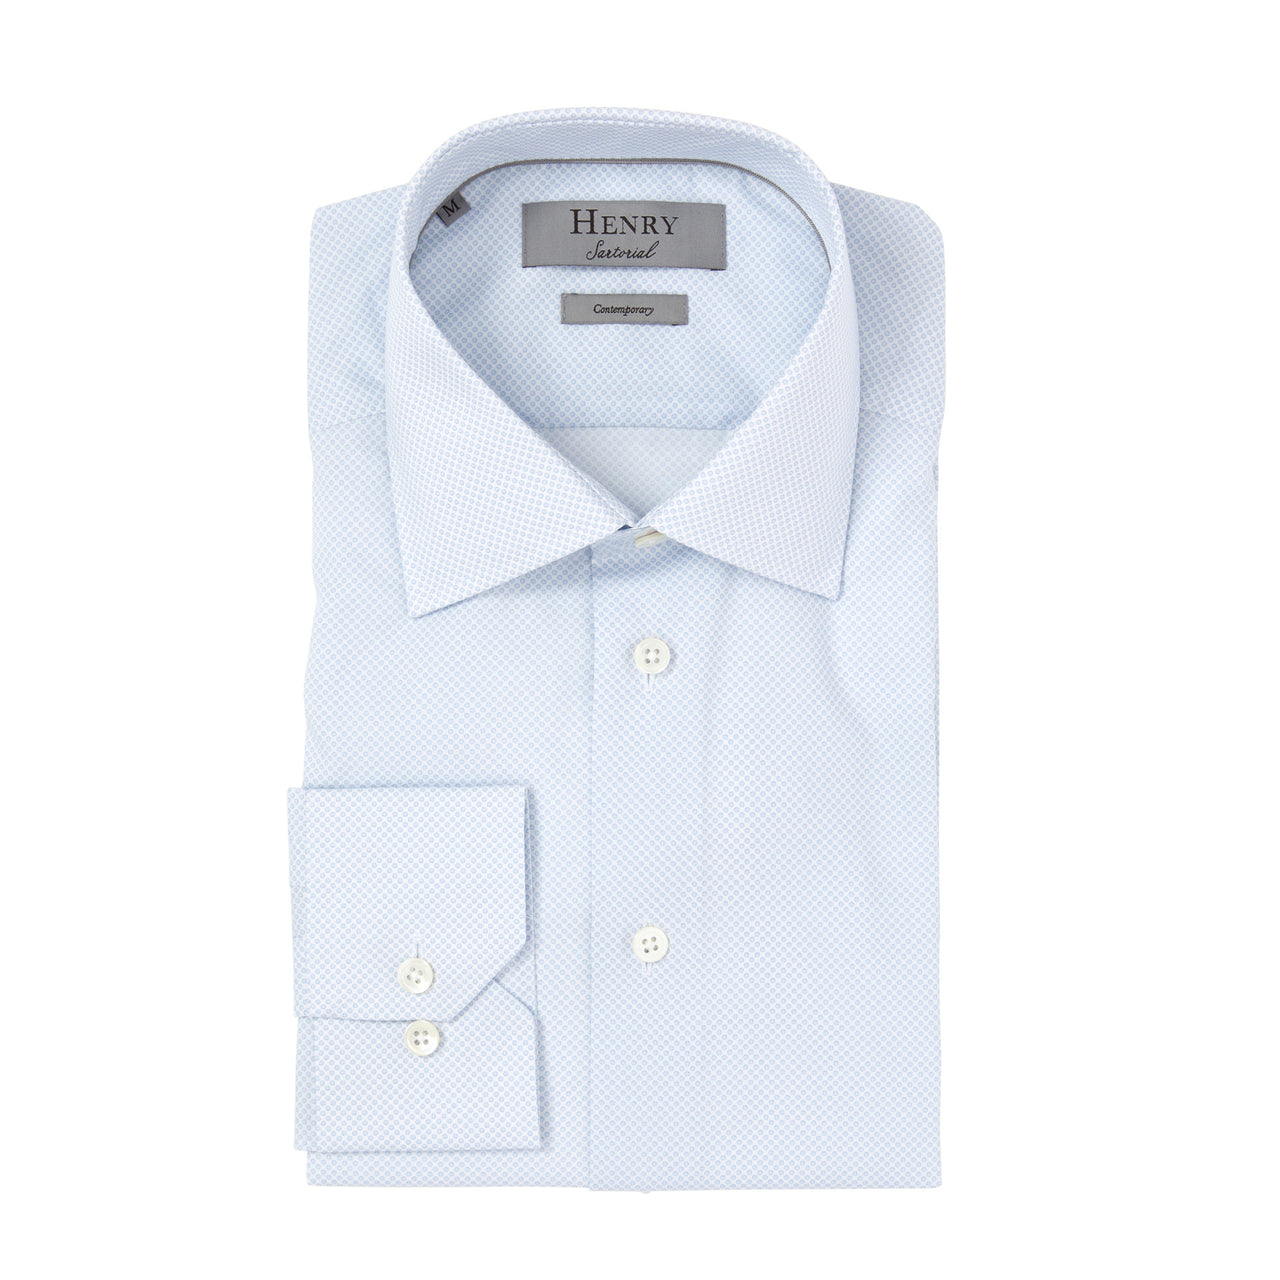 HENRY SARTORIAL Casual Shirt WHITE